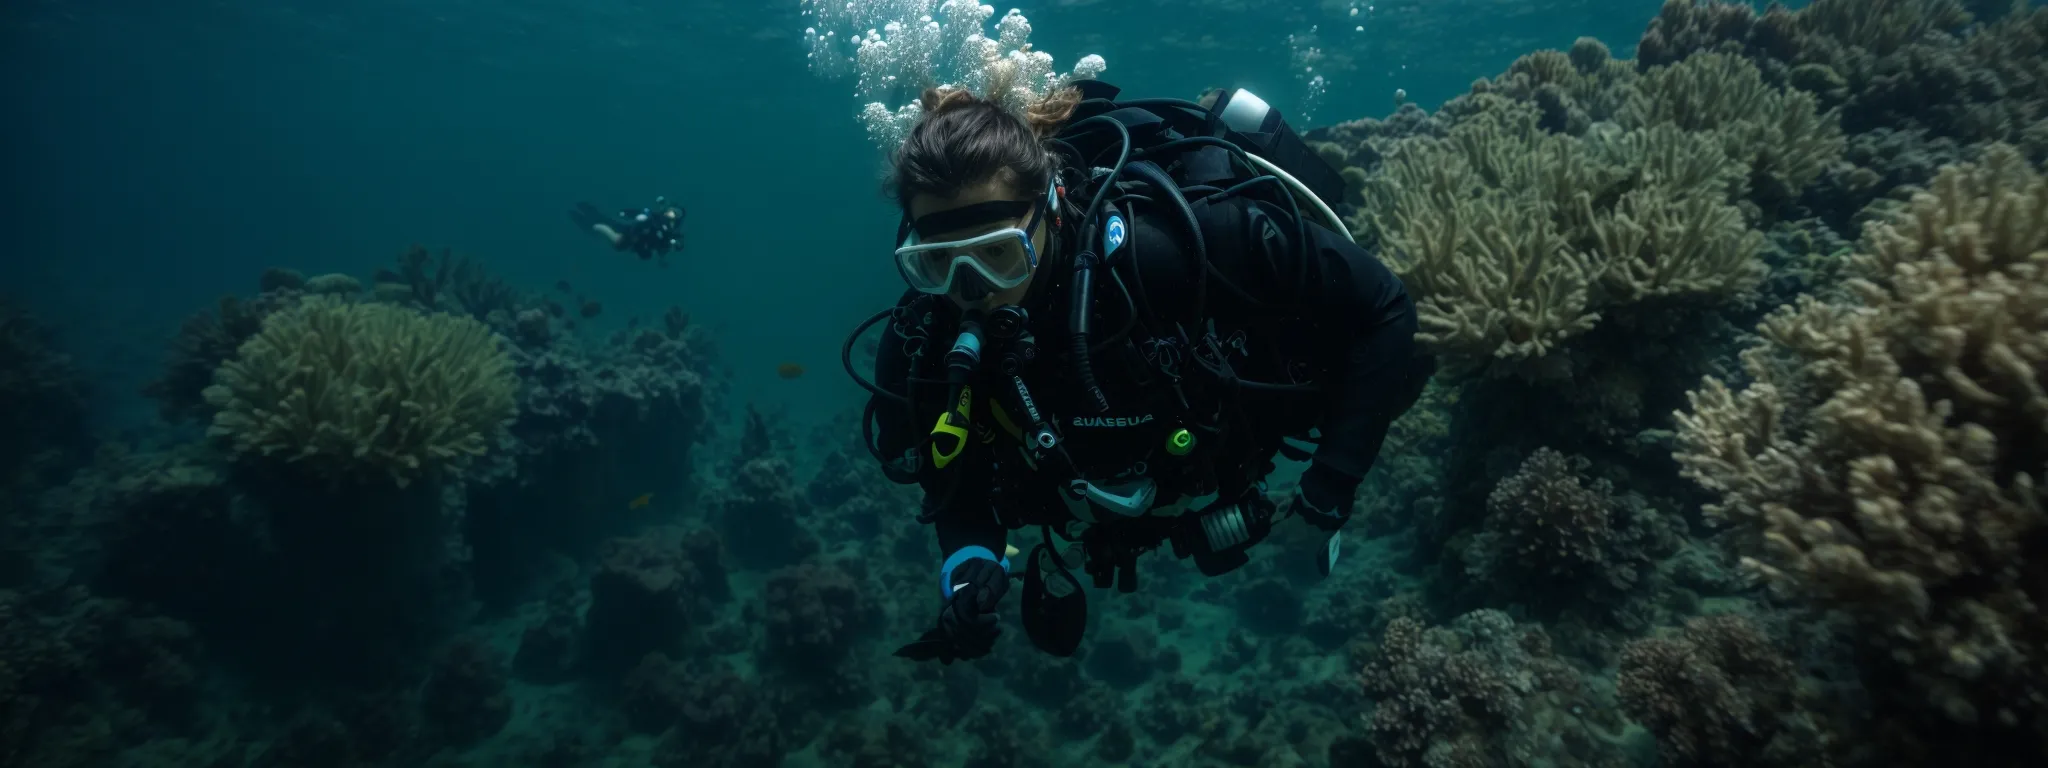 a person in a scuba diving suit explores underwater terrain, symbolizing a deep dive into technical seo.